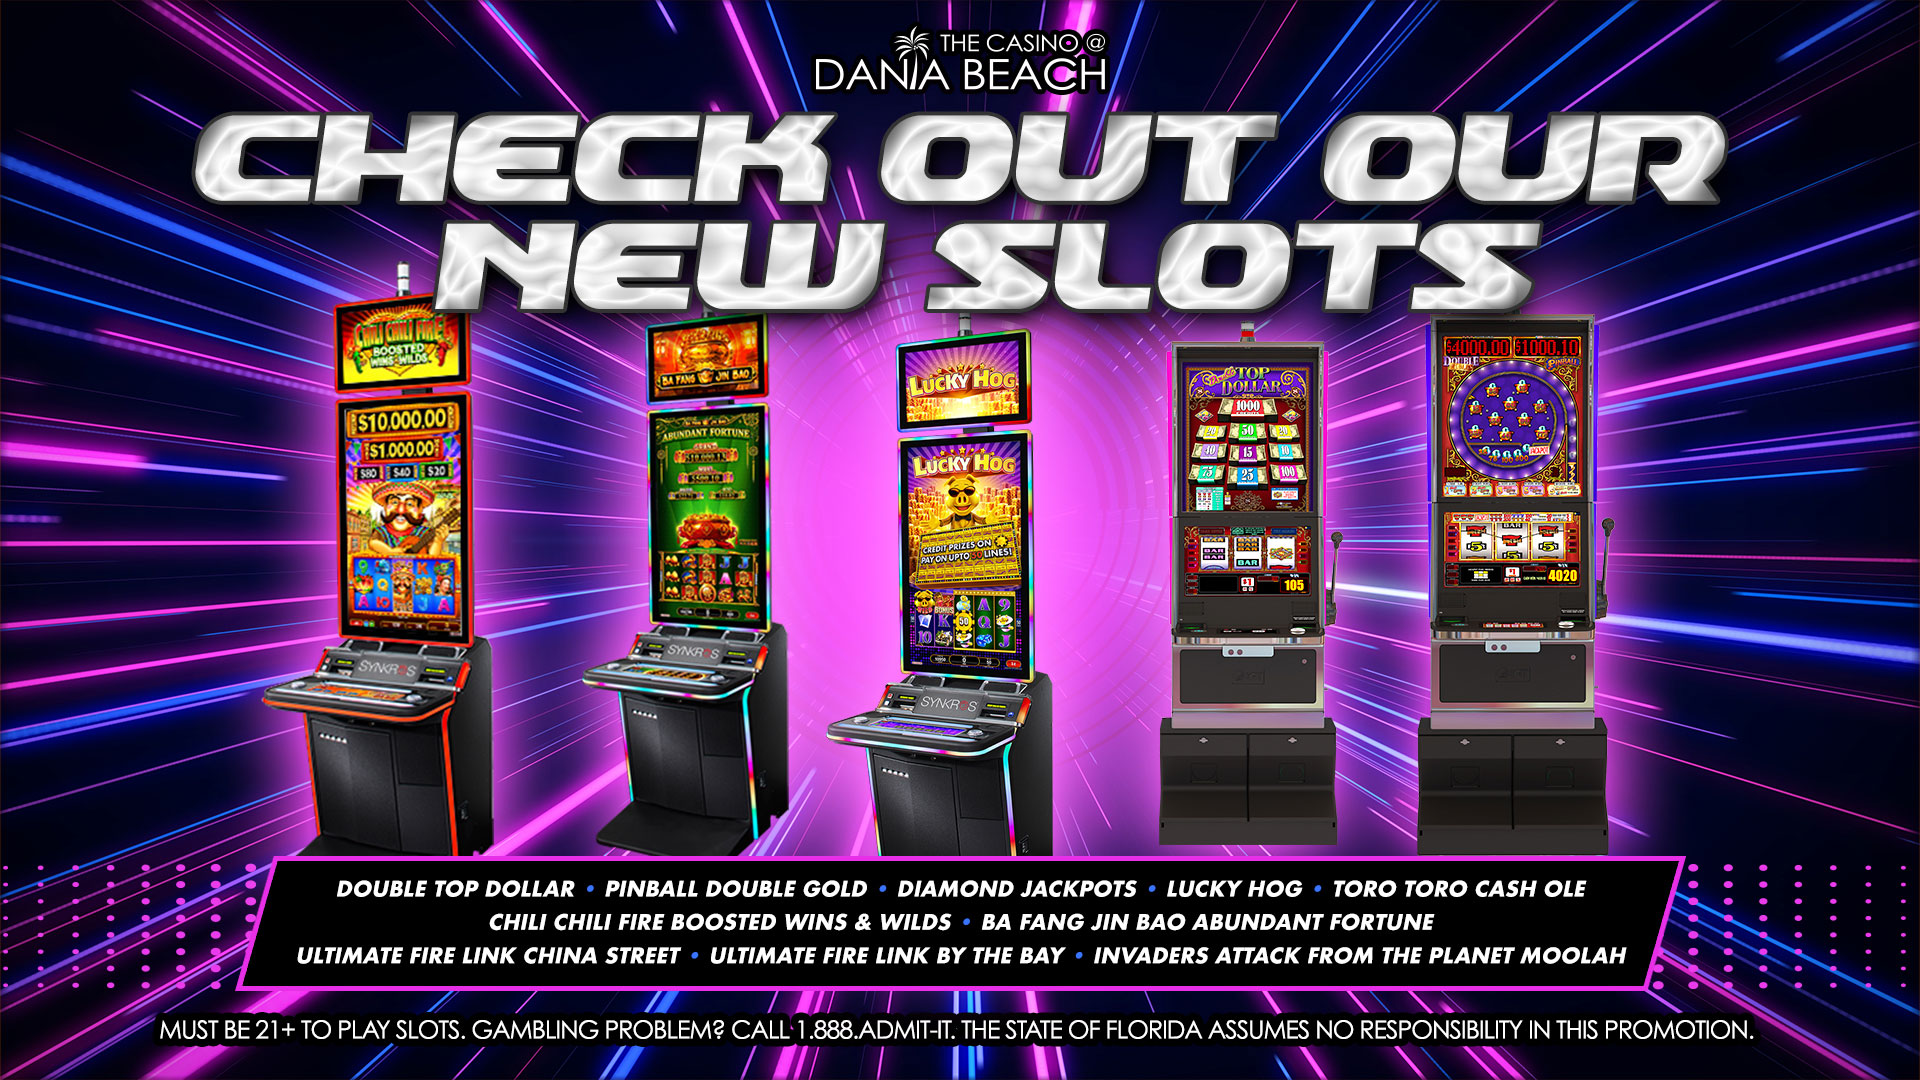 Players Club at the Casino at Dania Beach